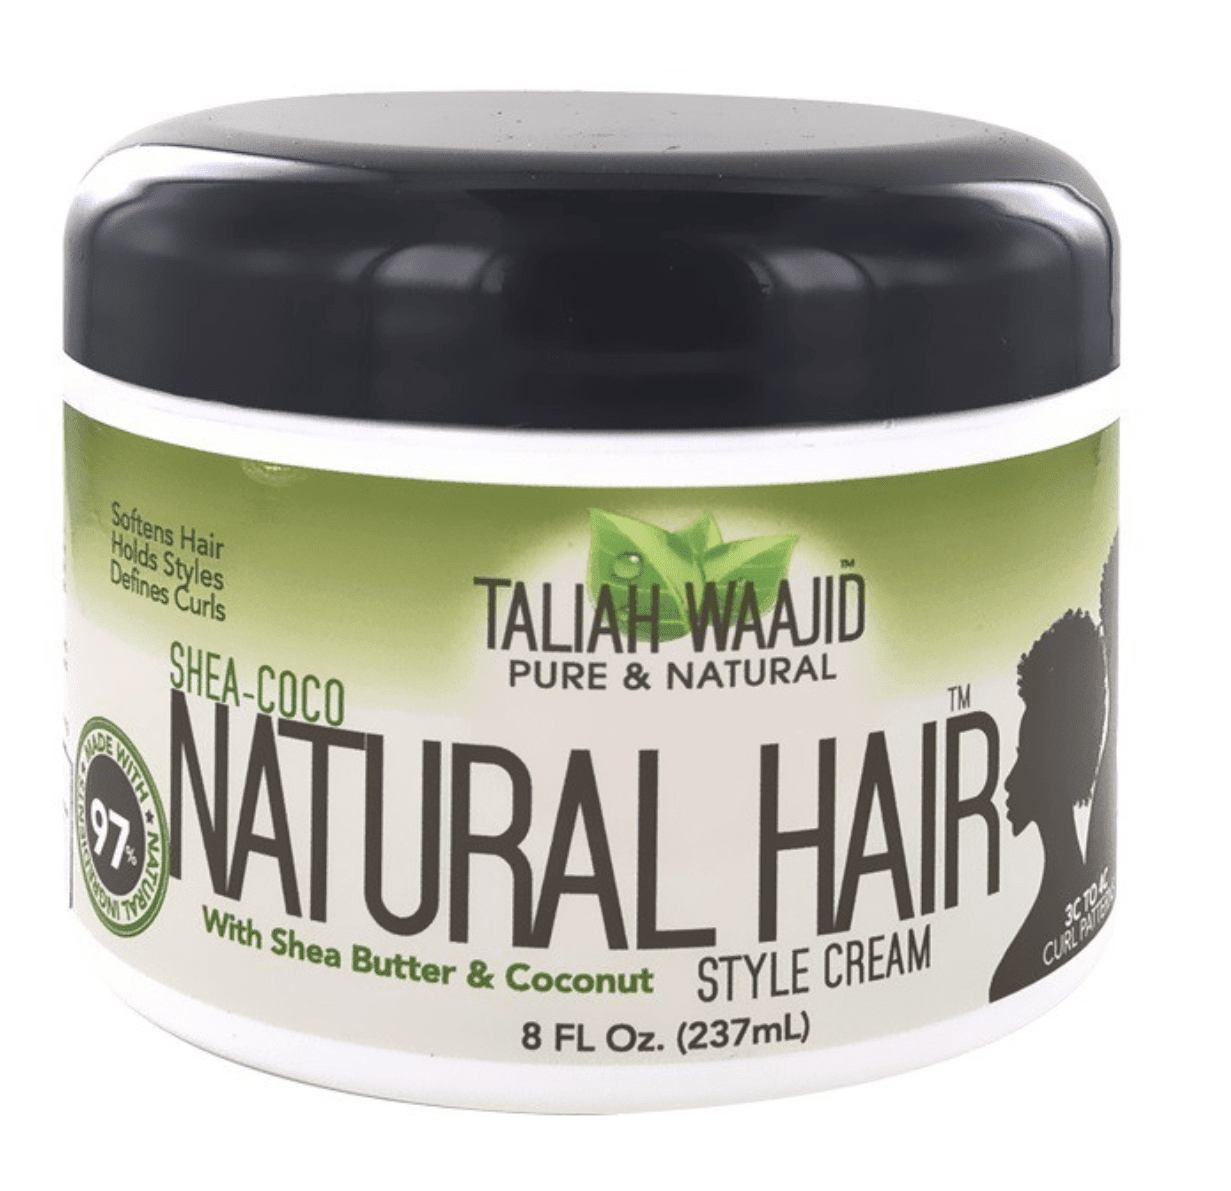 Taliah Waajid - Pure & Natural - "Natural hair" styling cream - 237ml - Taliah Waajid - Ethni Beauty Market